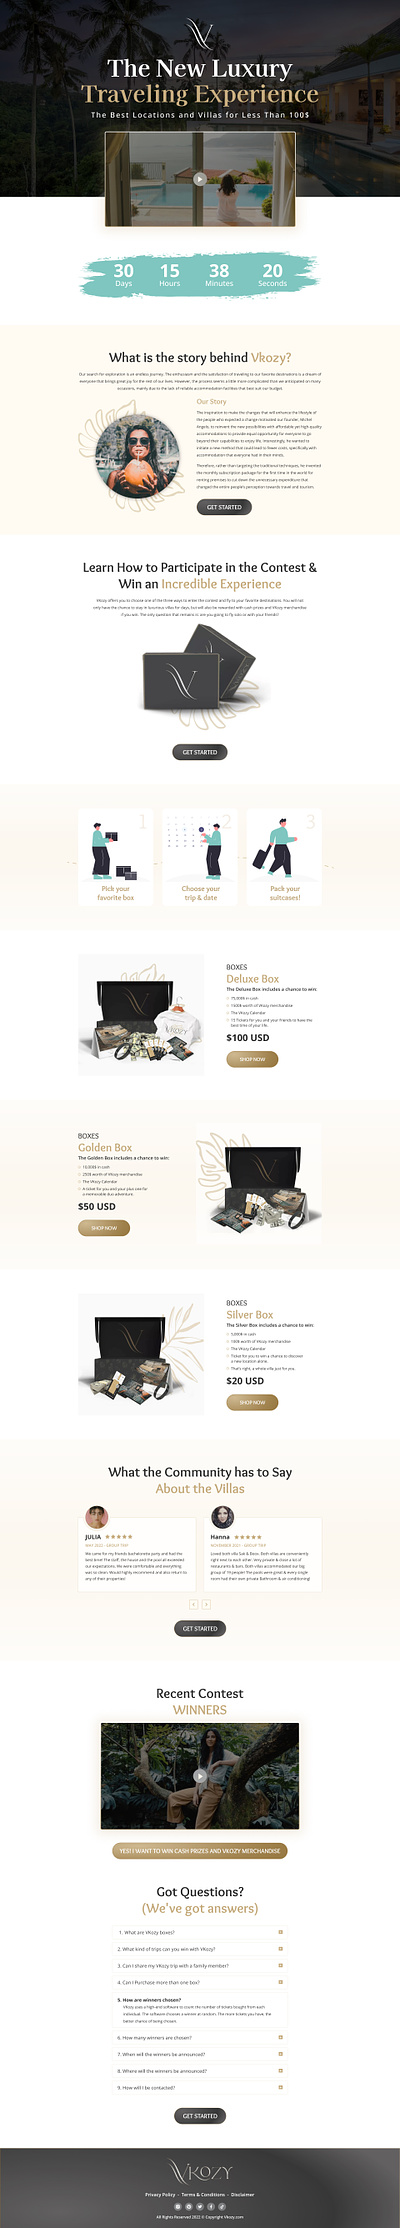 The new Luxury clickfunnel design graphic graphic design landing landing page ux design web